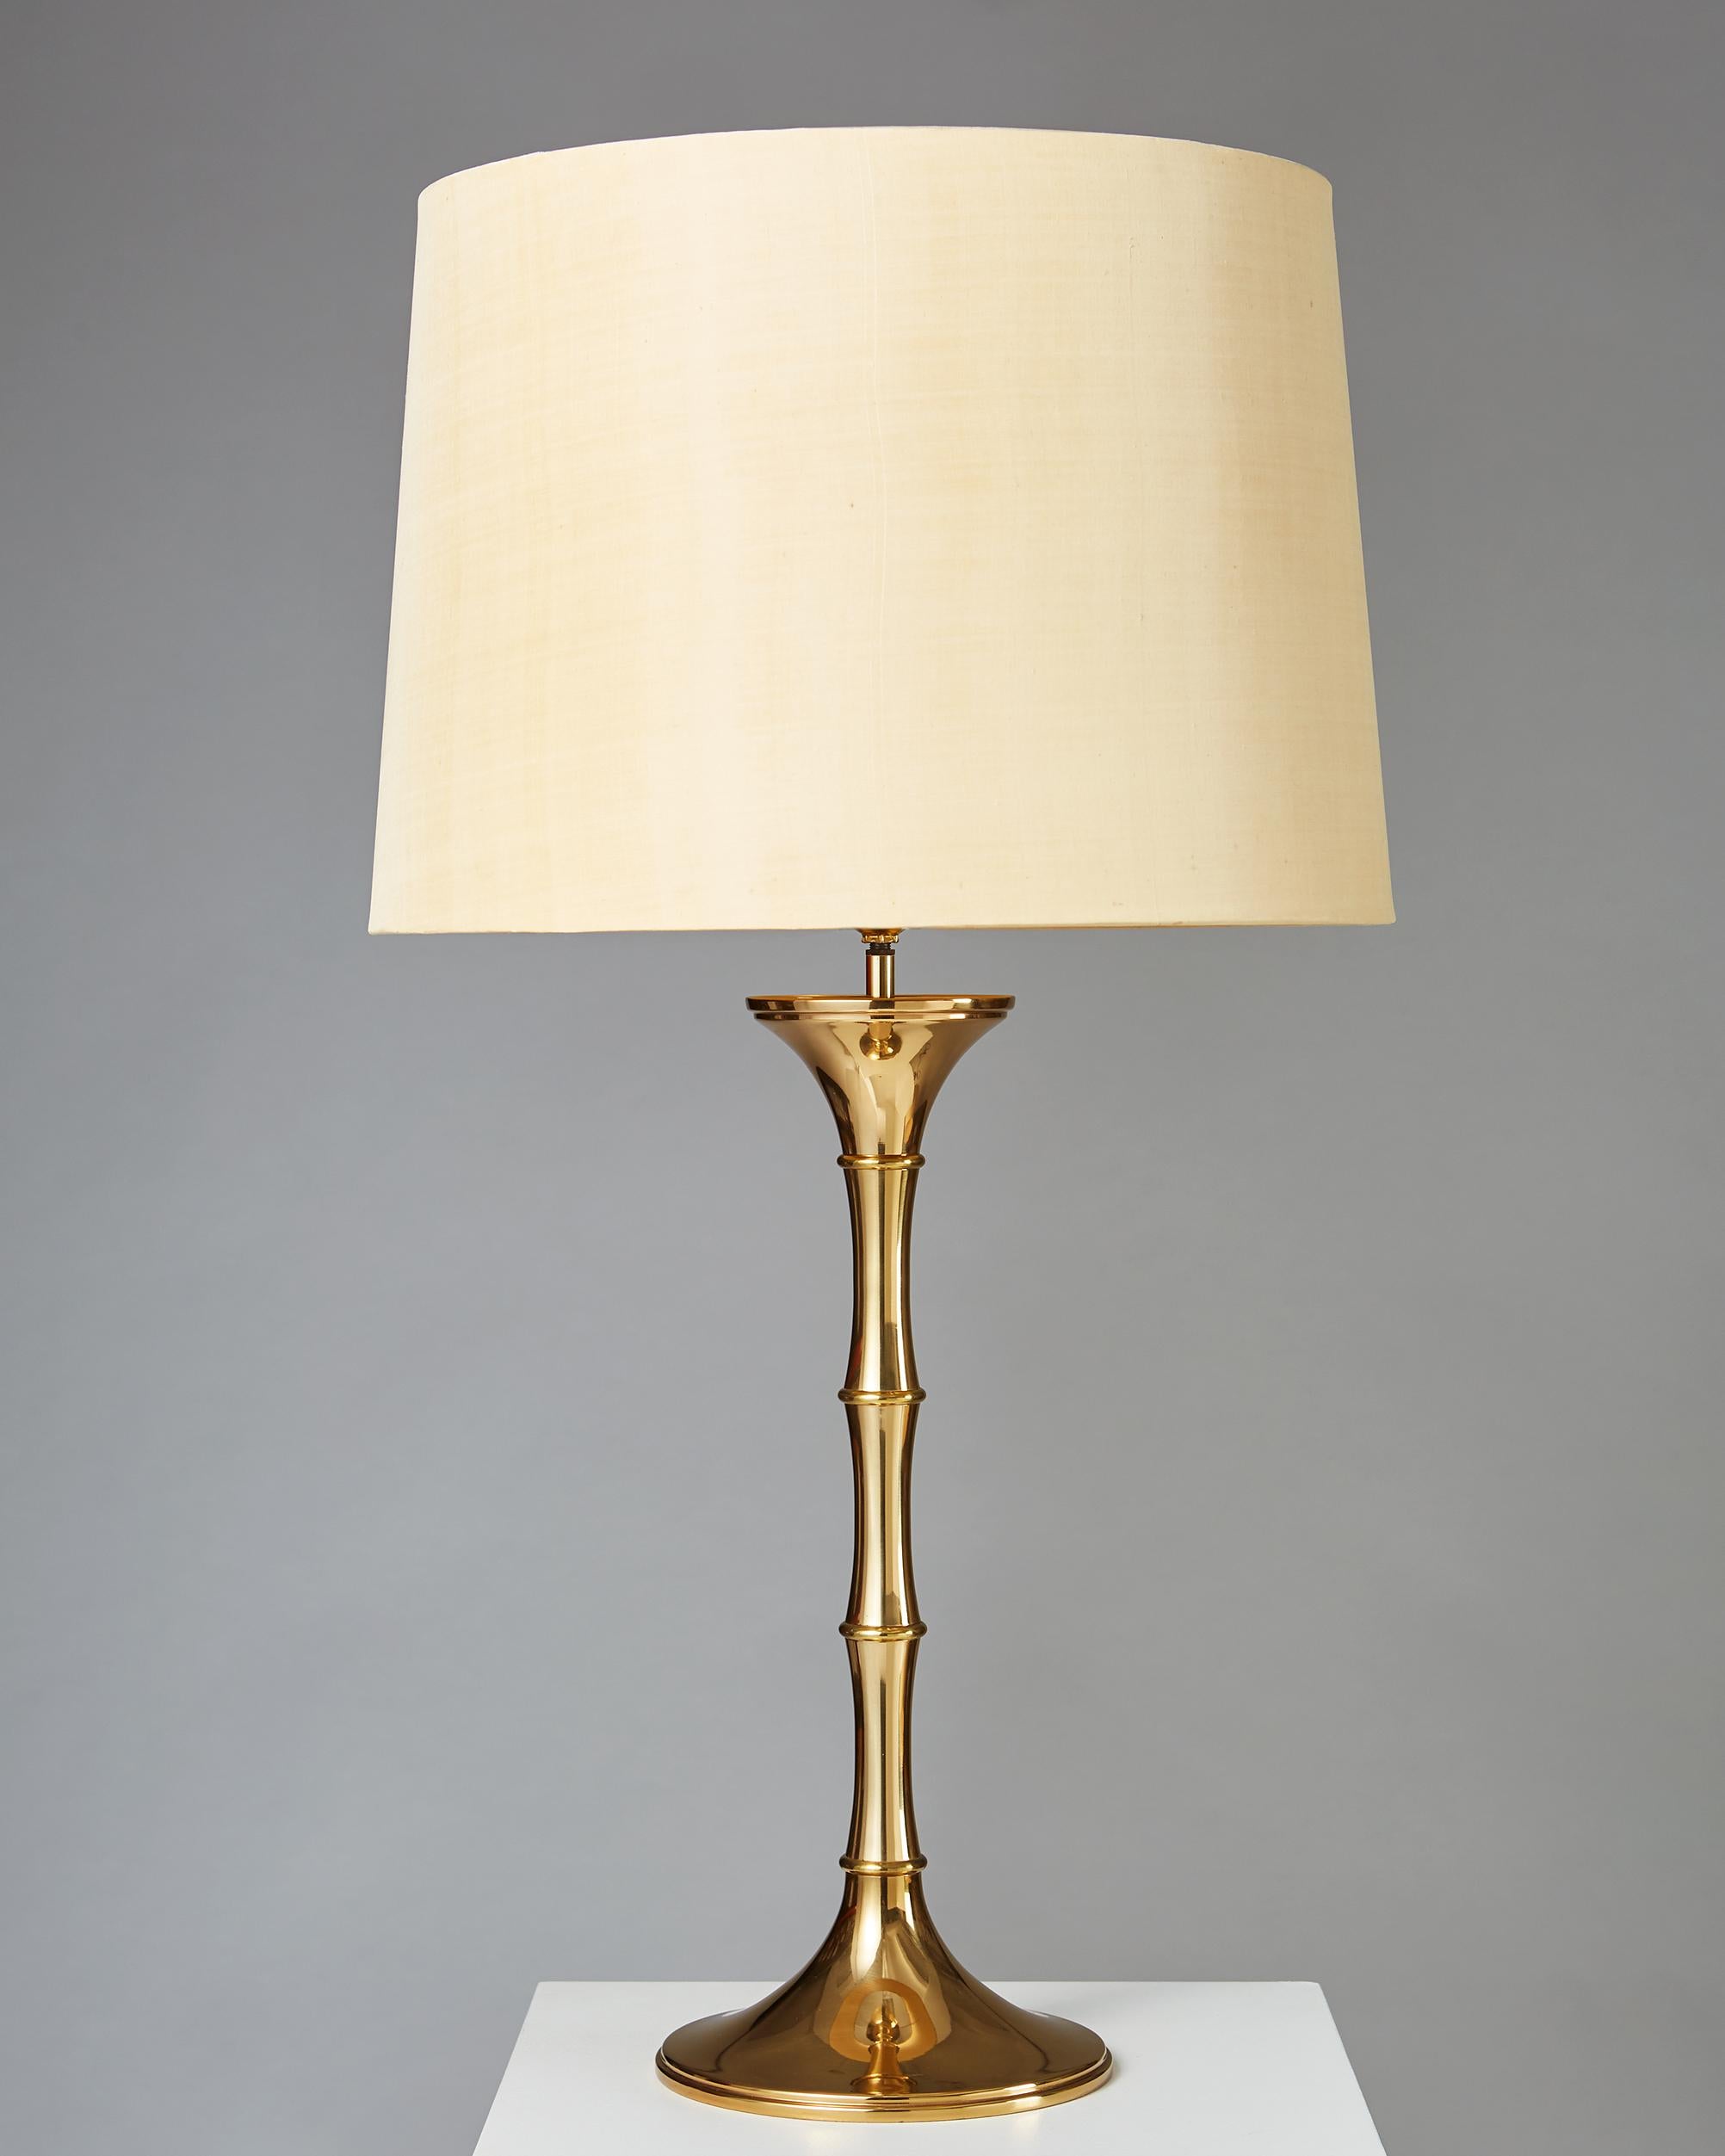 Scandinavian Modern Pair of Table Lamps ‘Bamboo MI1’ Designed by Ingo Maurer, Germany, 1968